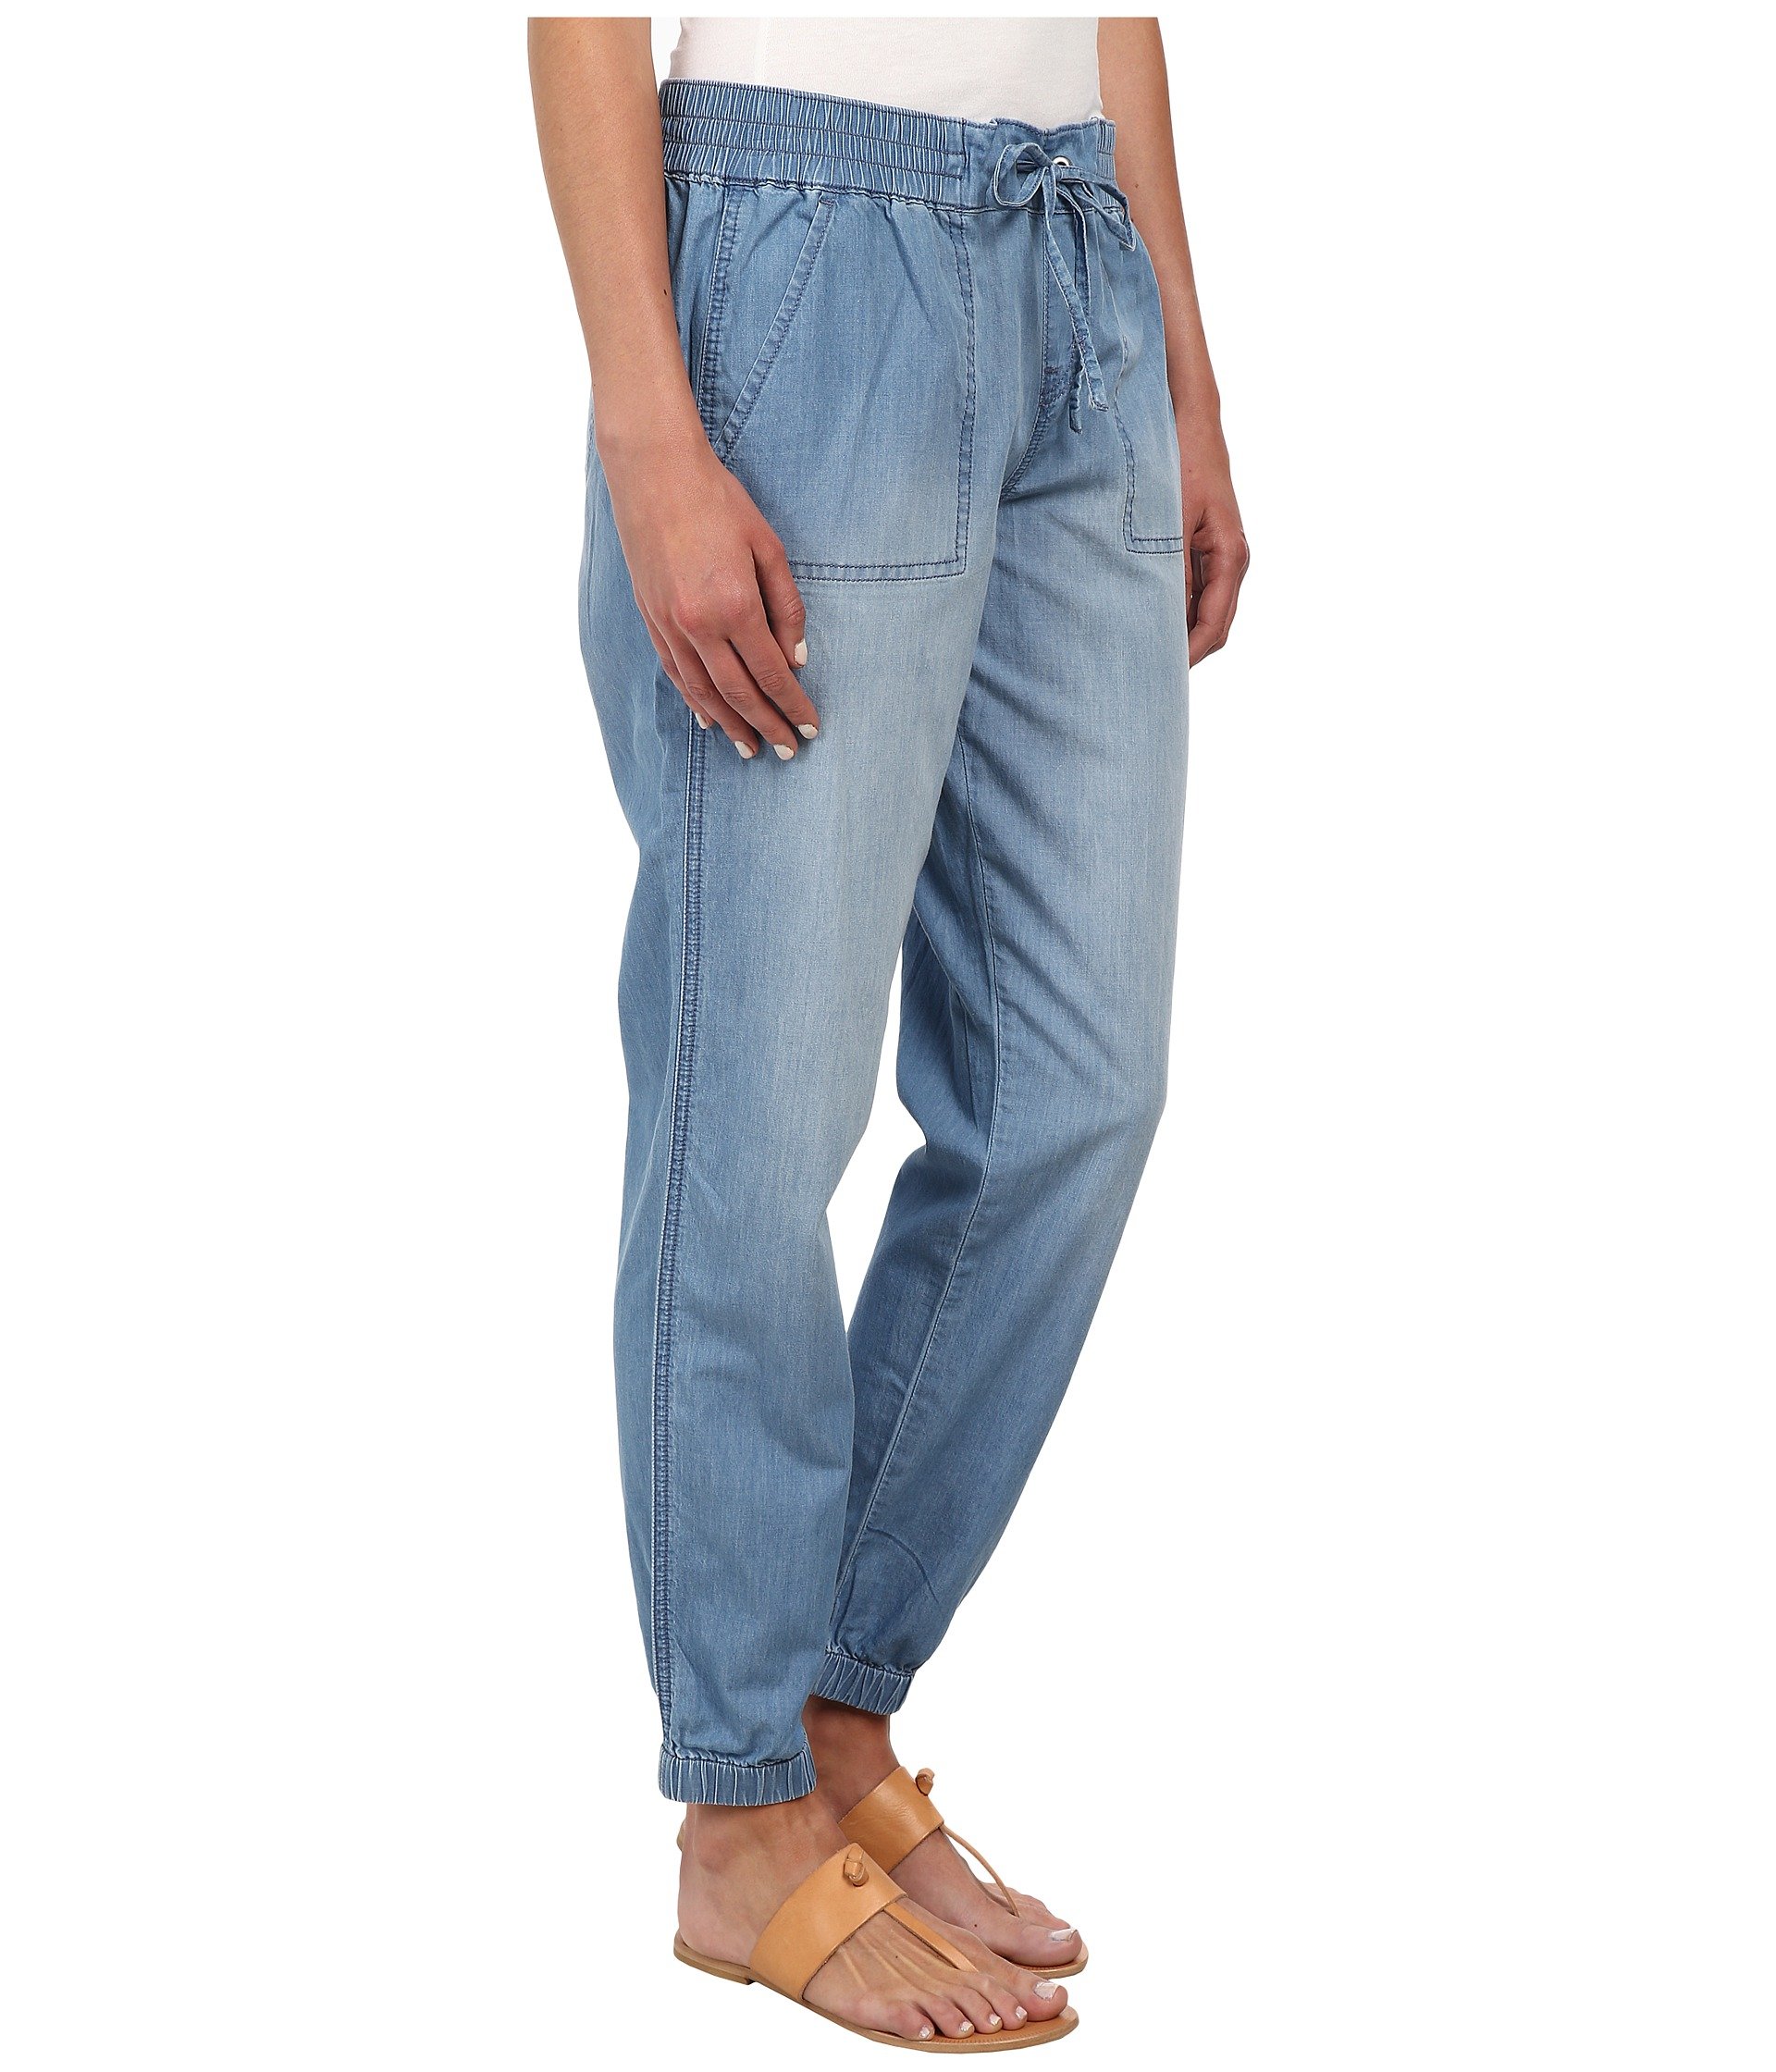 Lyst Calvin Klein Jeans Drawstring Denim Pants In Colbalt Blue in Blue